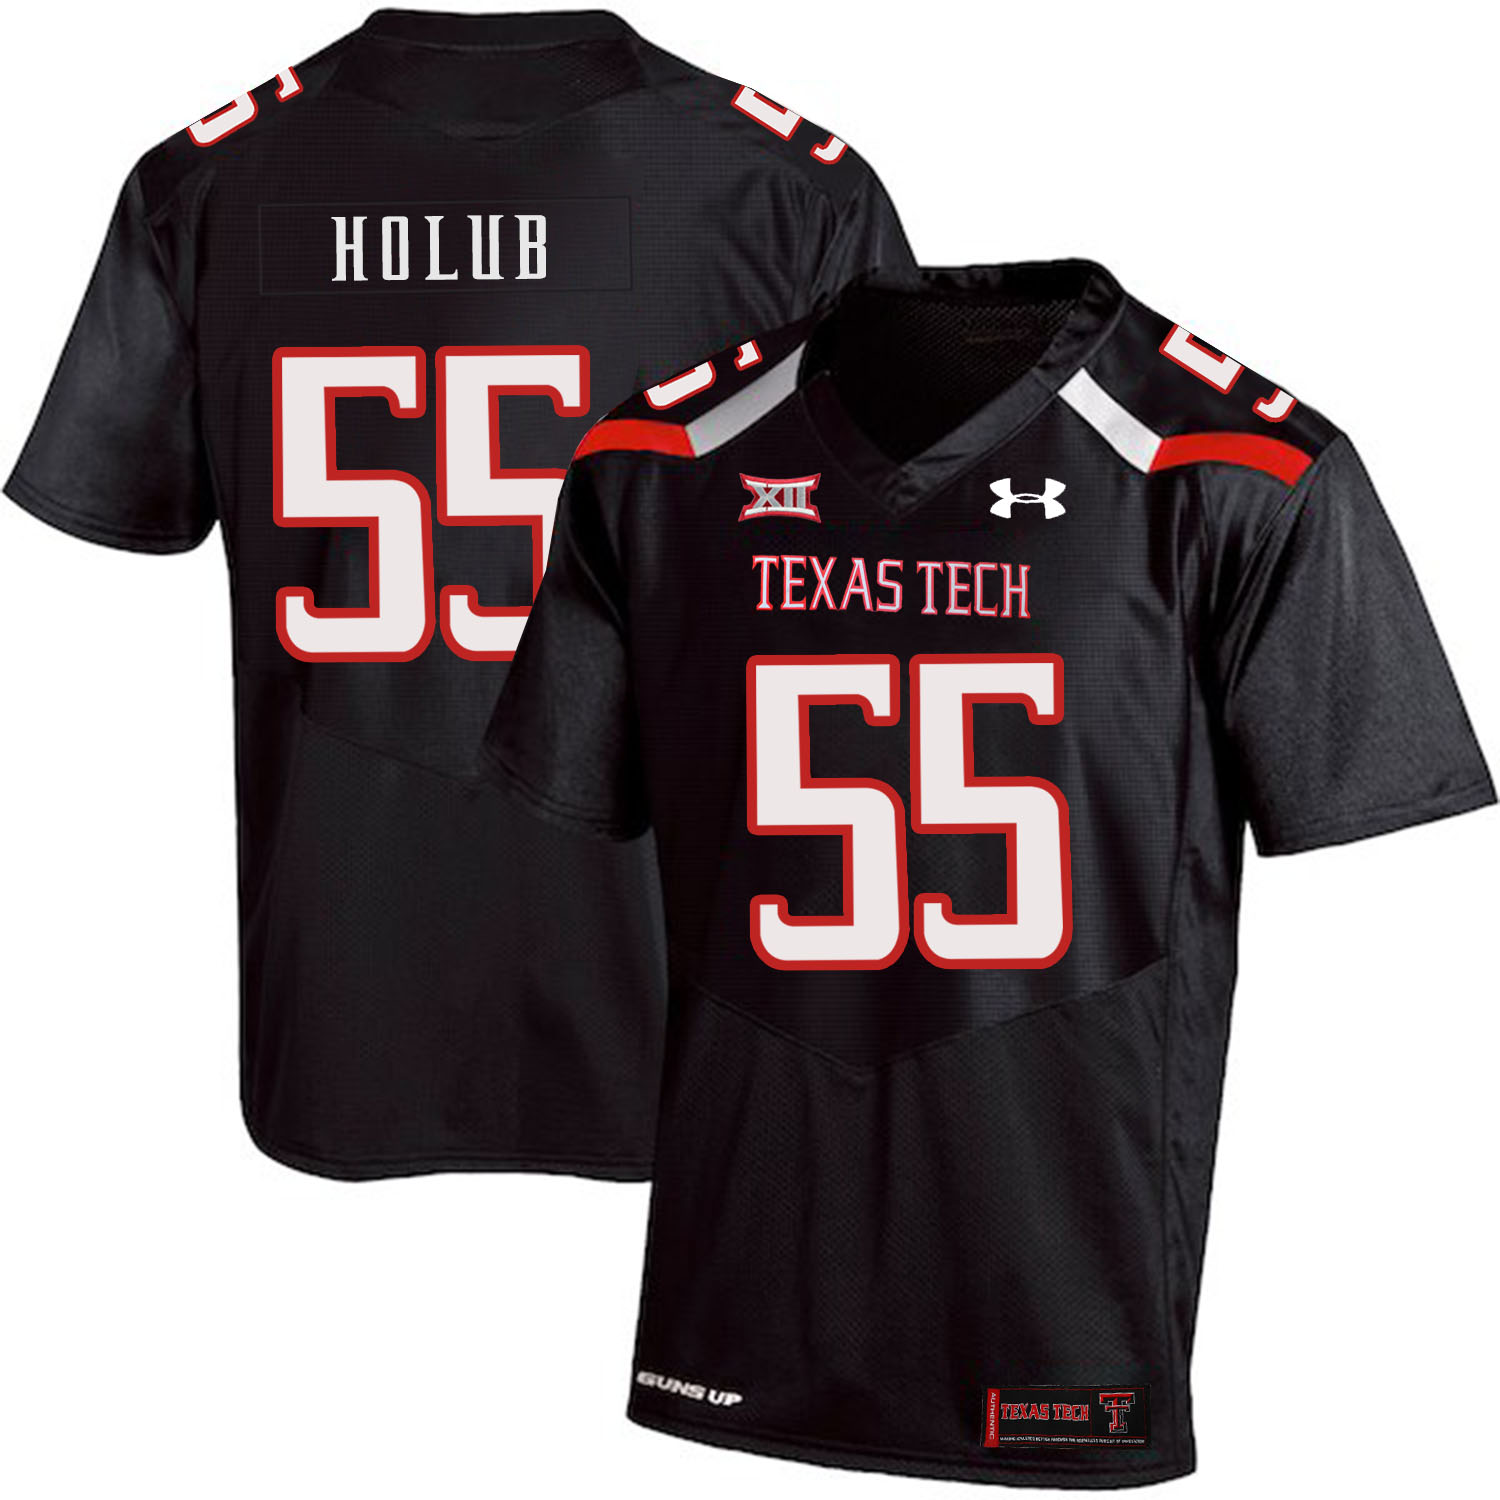 Texas Tech Red Raiders 55 E.J. Holub Black College Football Jersey